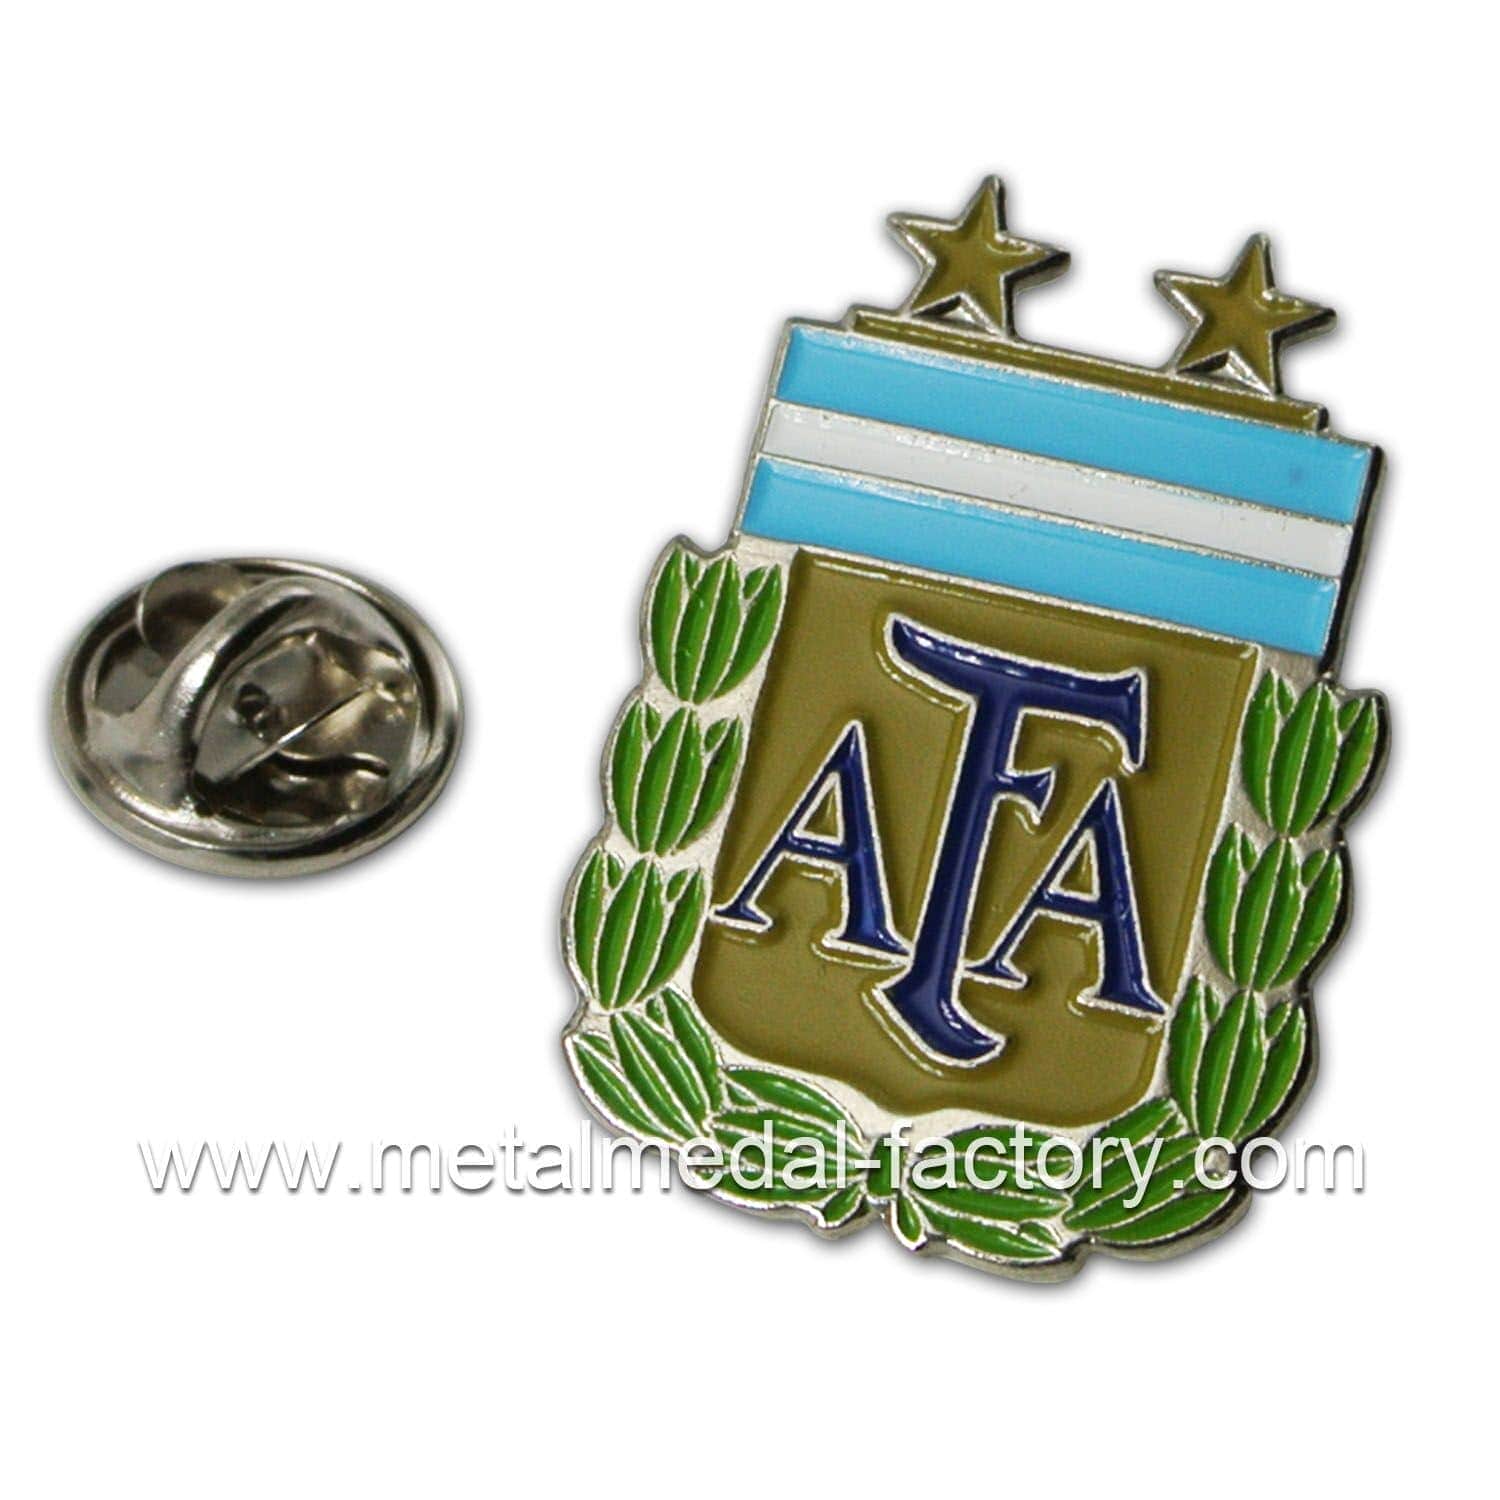 AFA pins